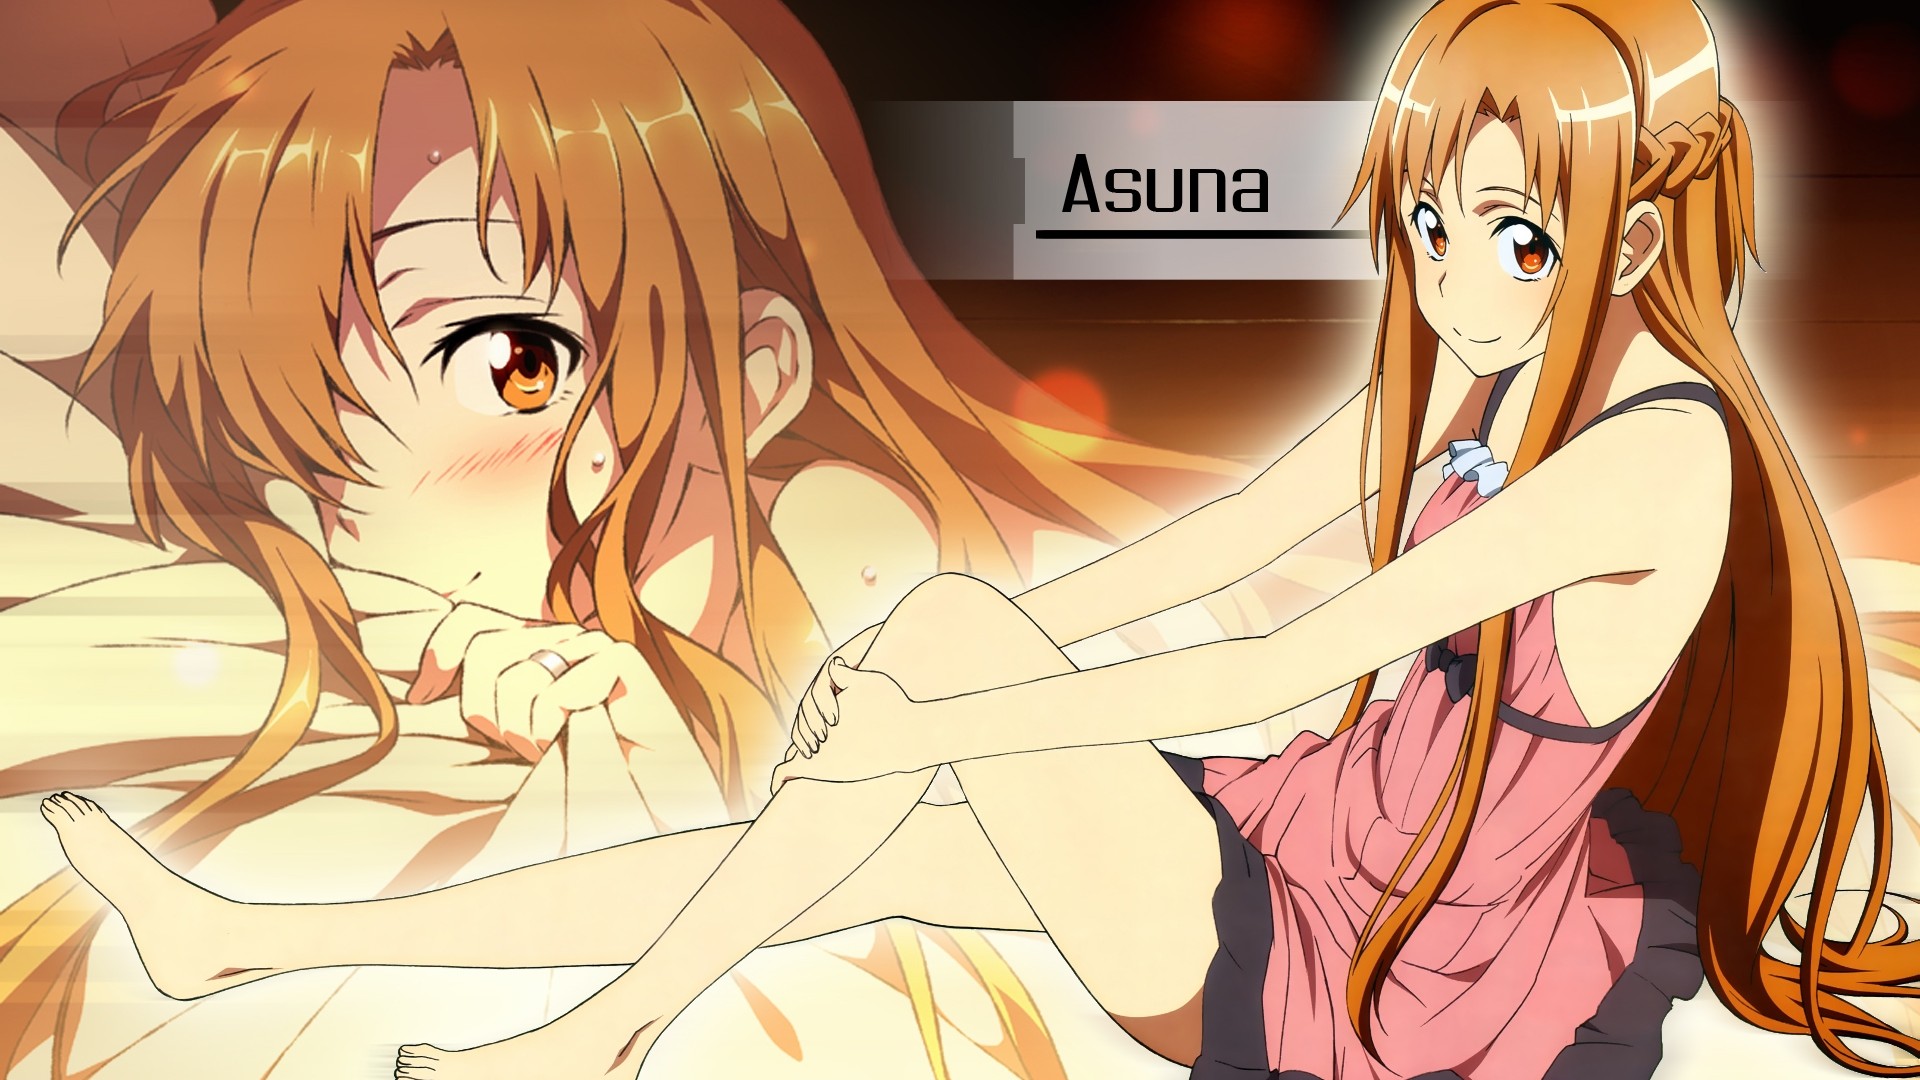 Free Download Wallpaper Yuuki Asuna Yuuki Asuna Anime Picsfabcom Desktop X For Your